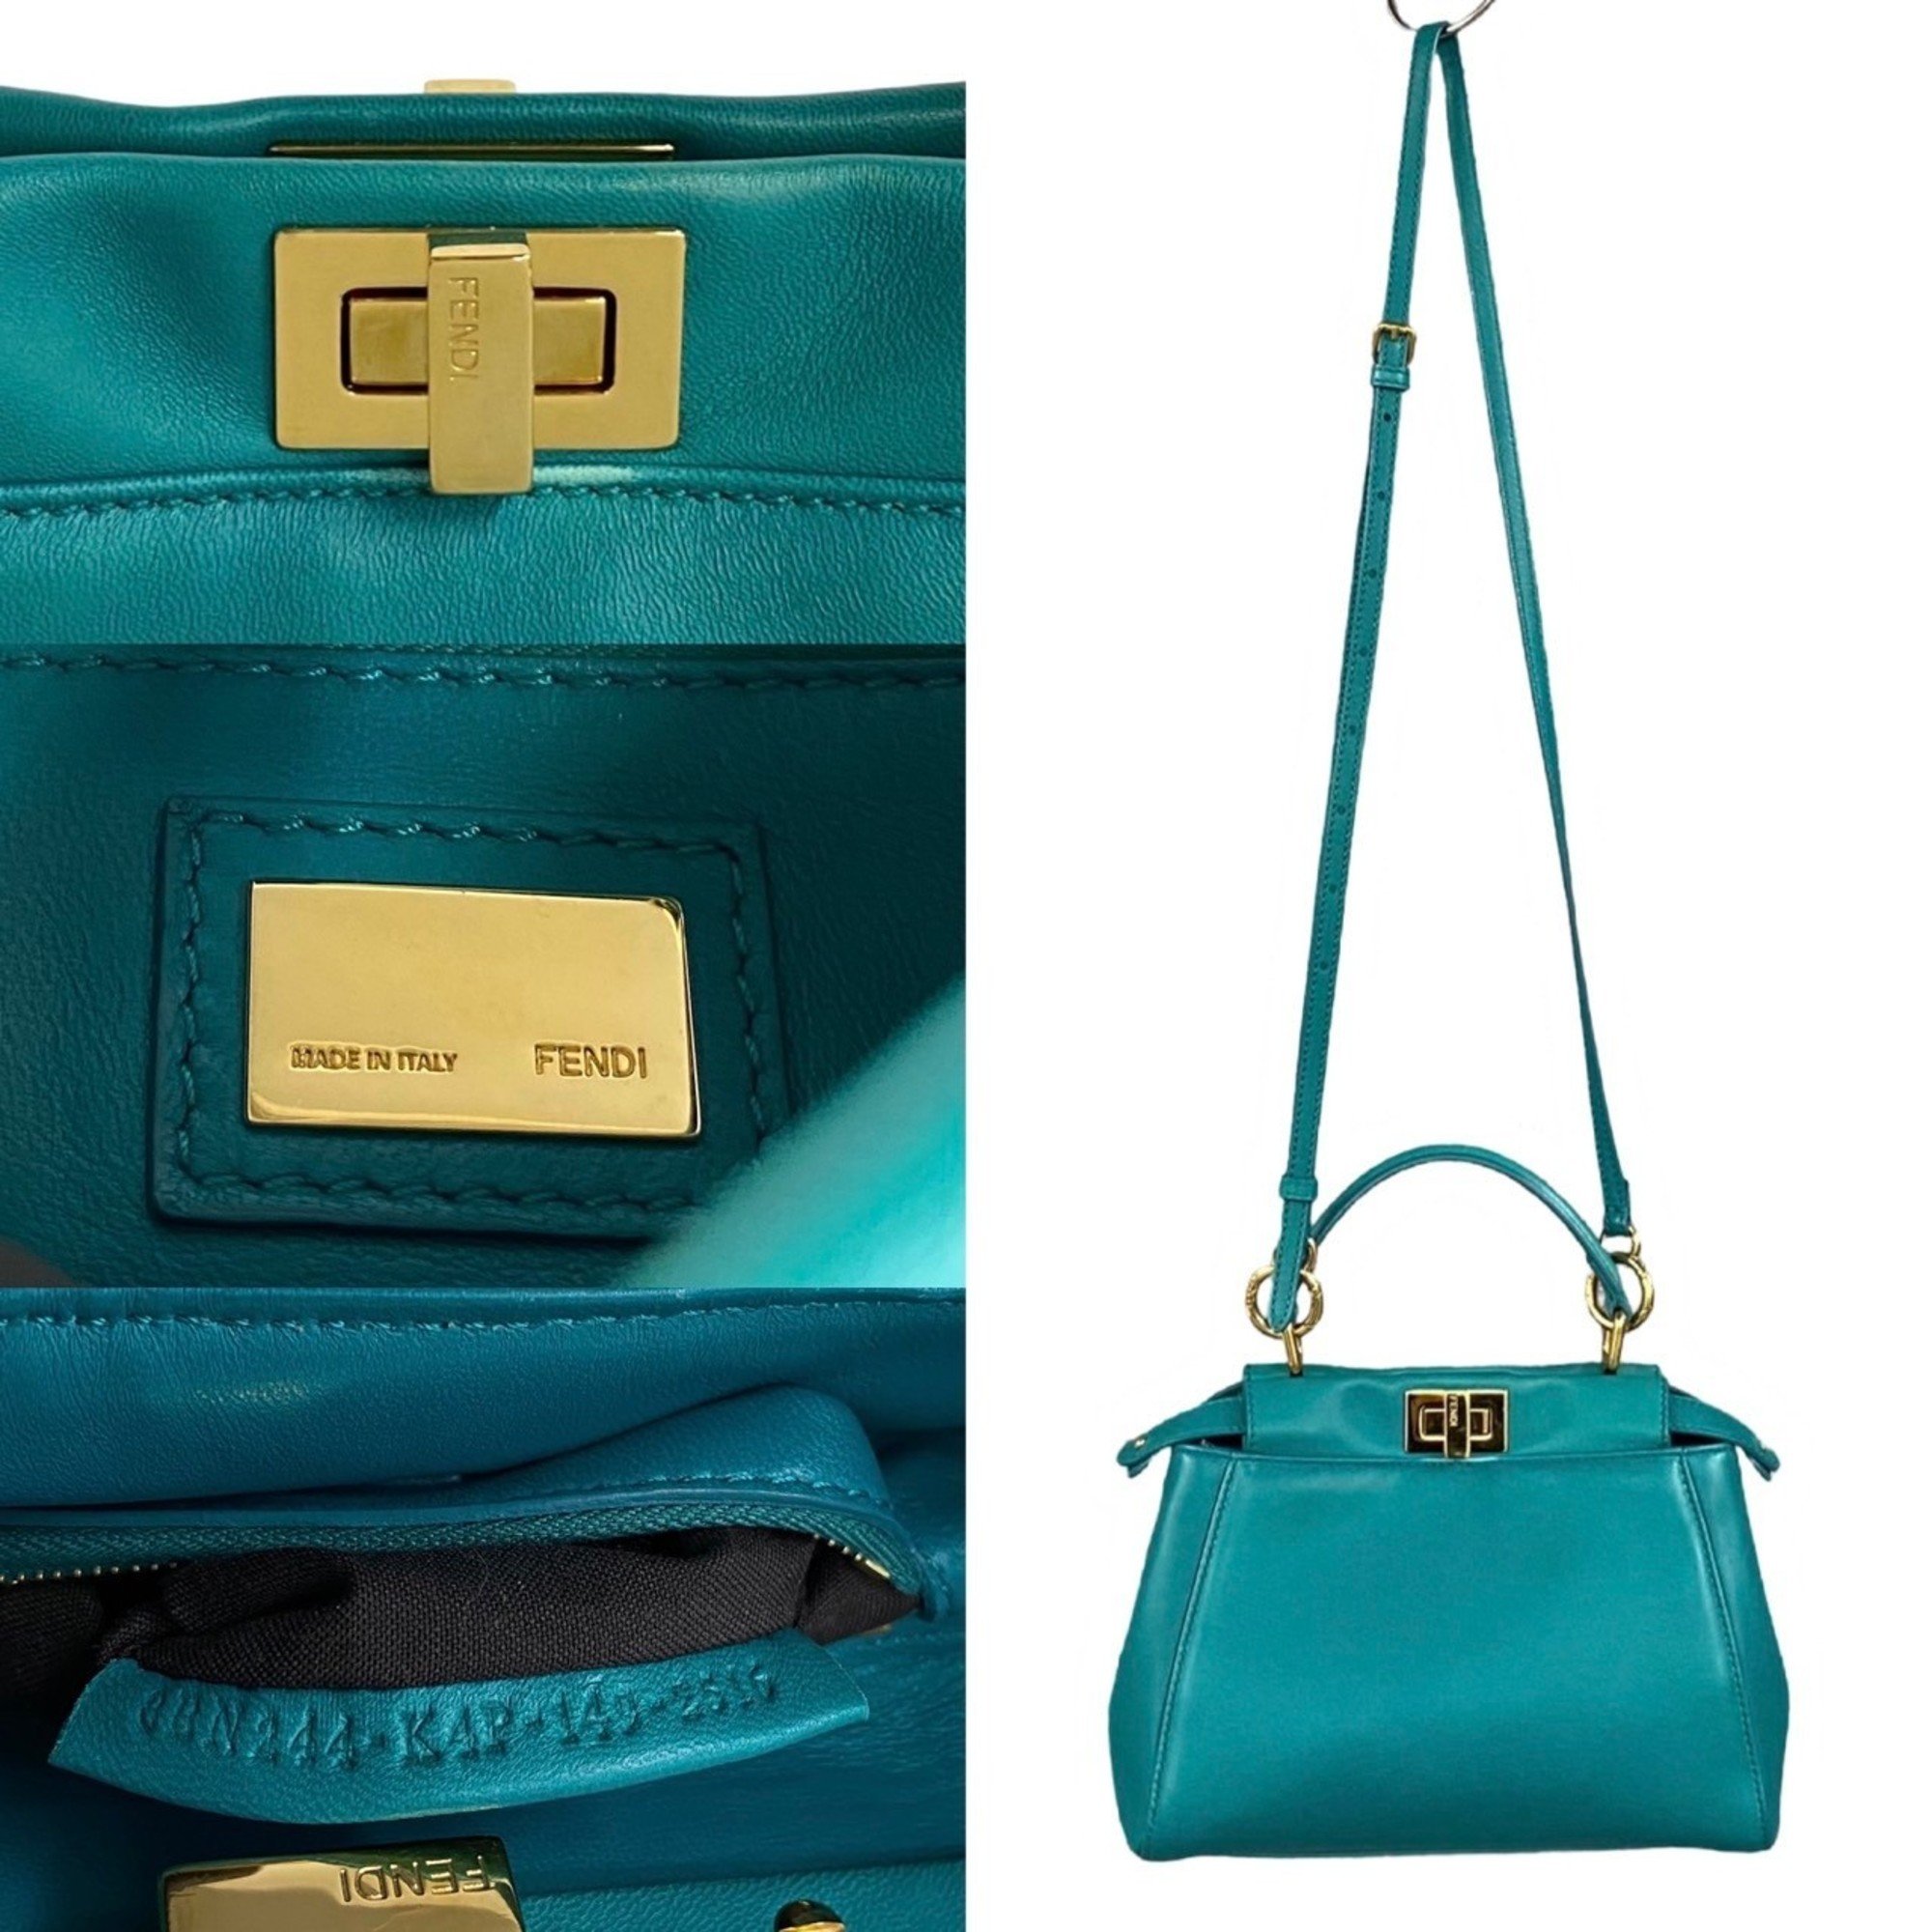 FENDI Peekaboo Leather Turnlock 2way Handbag Shoulder Bag Green 91673